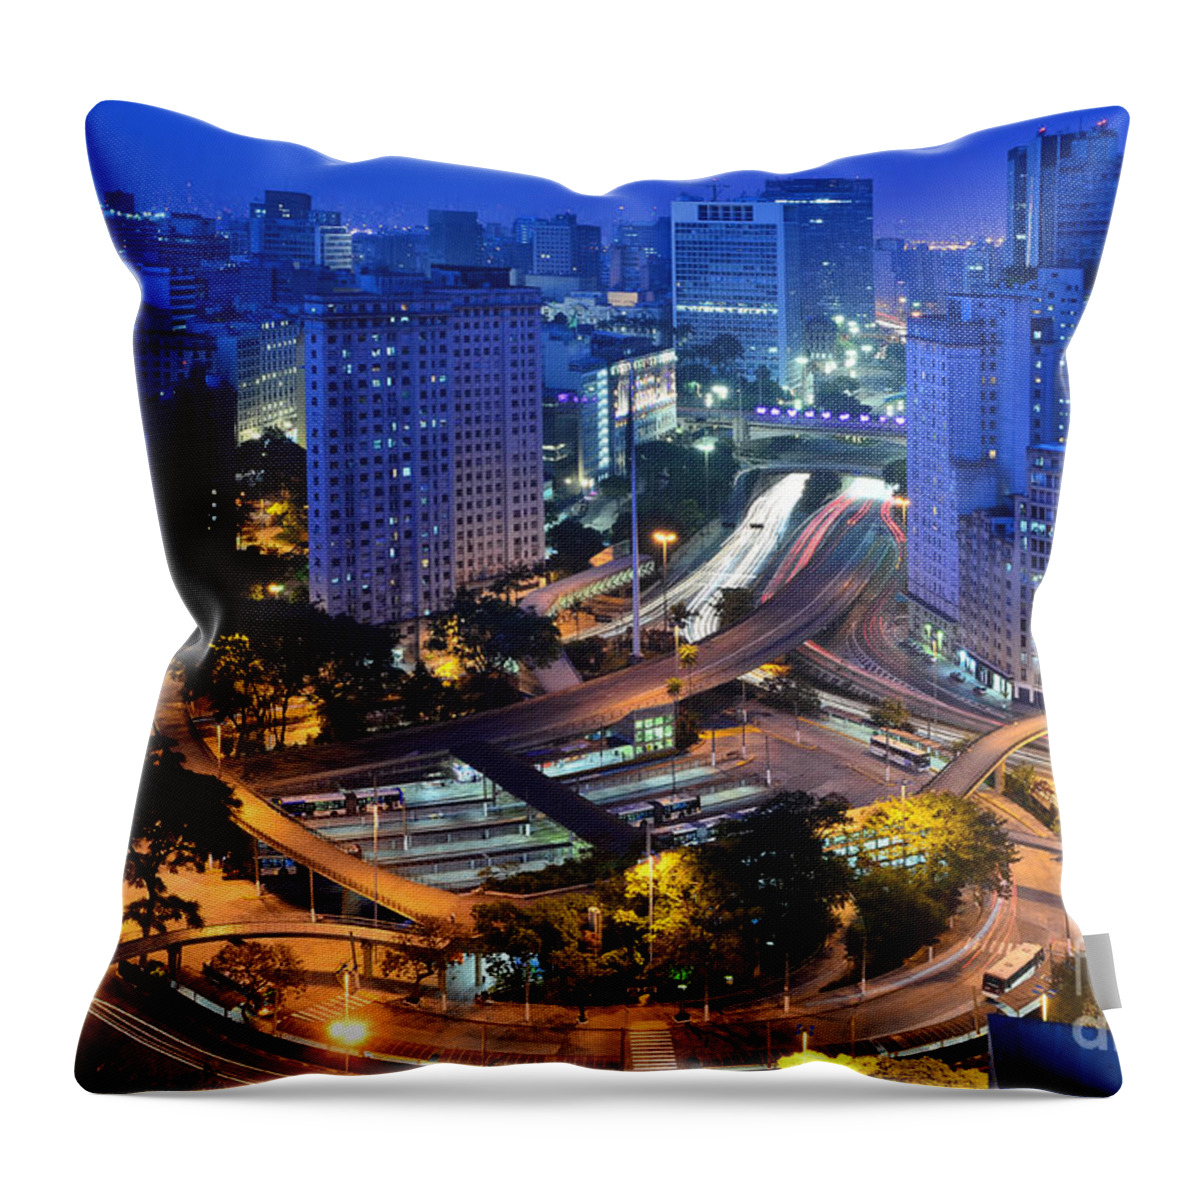 Saopaulo Throw Pillow featuring the photograph Sao Paulo Skyline - Downtown by Carlos Alkmin